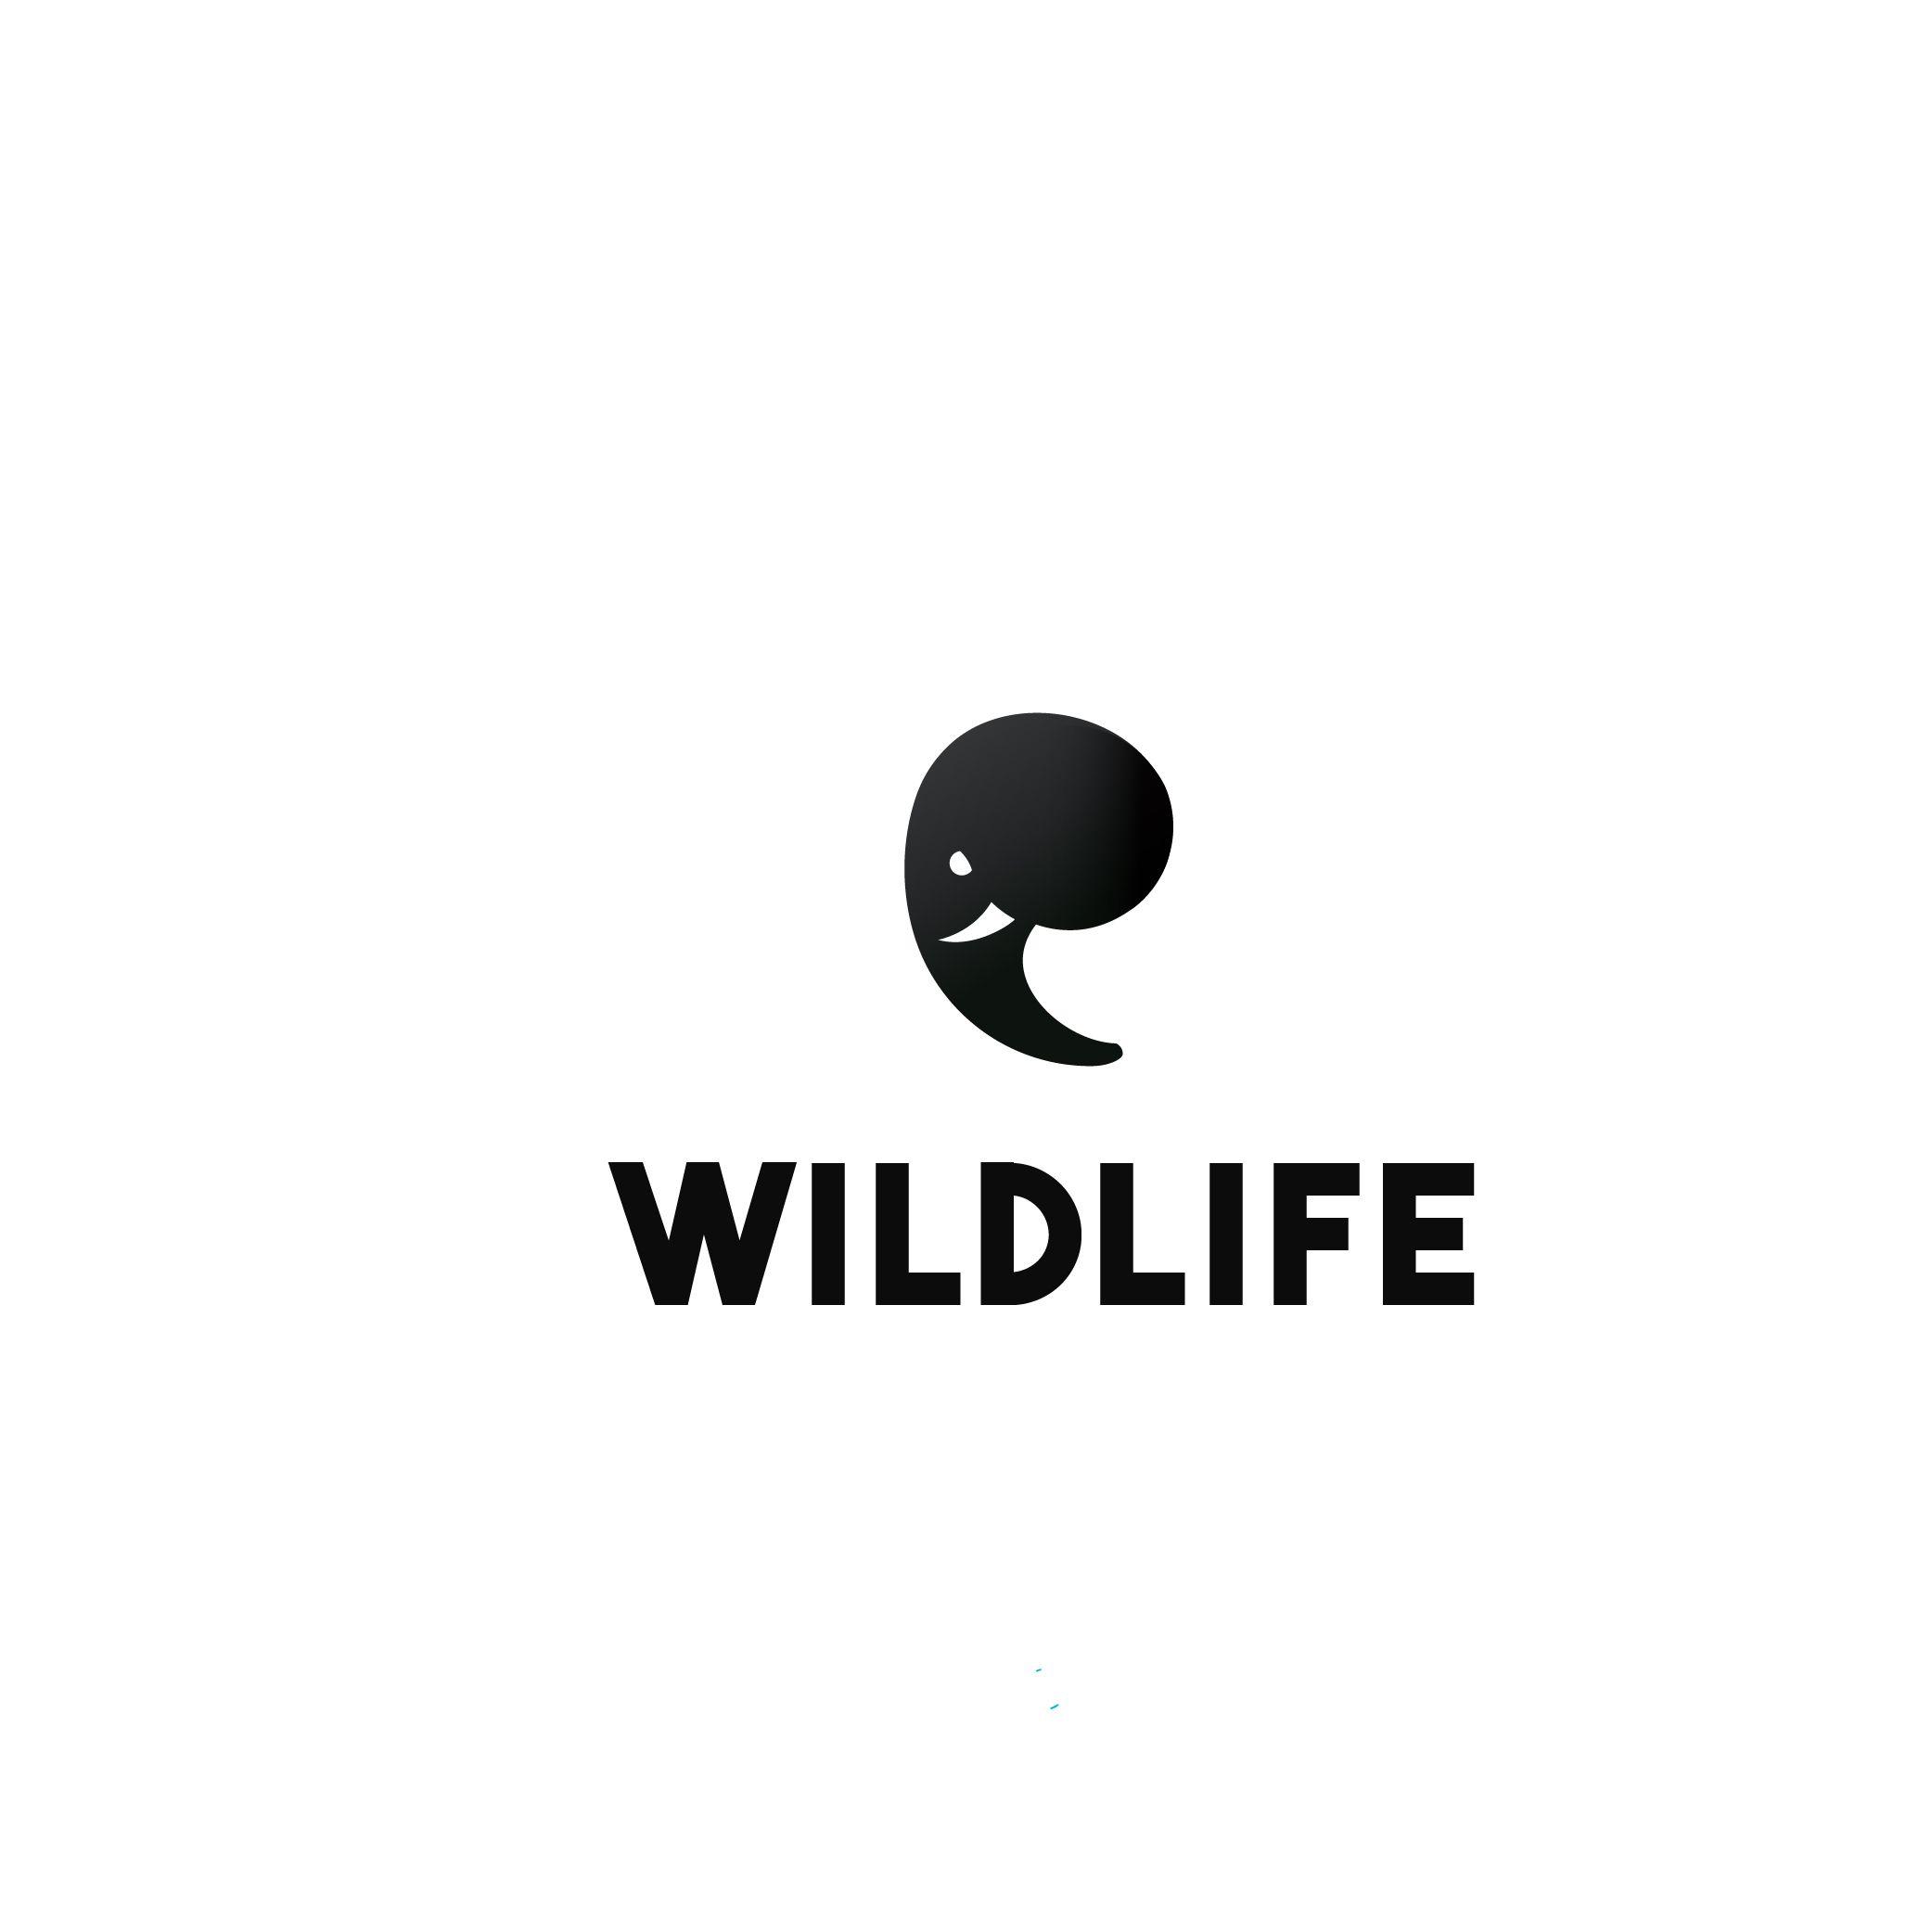 Wildlife Logo - wildlife logo thirty logos elephant | thirty logos | Logos, Elephant ...